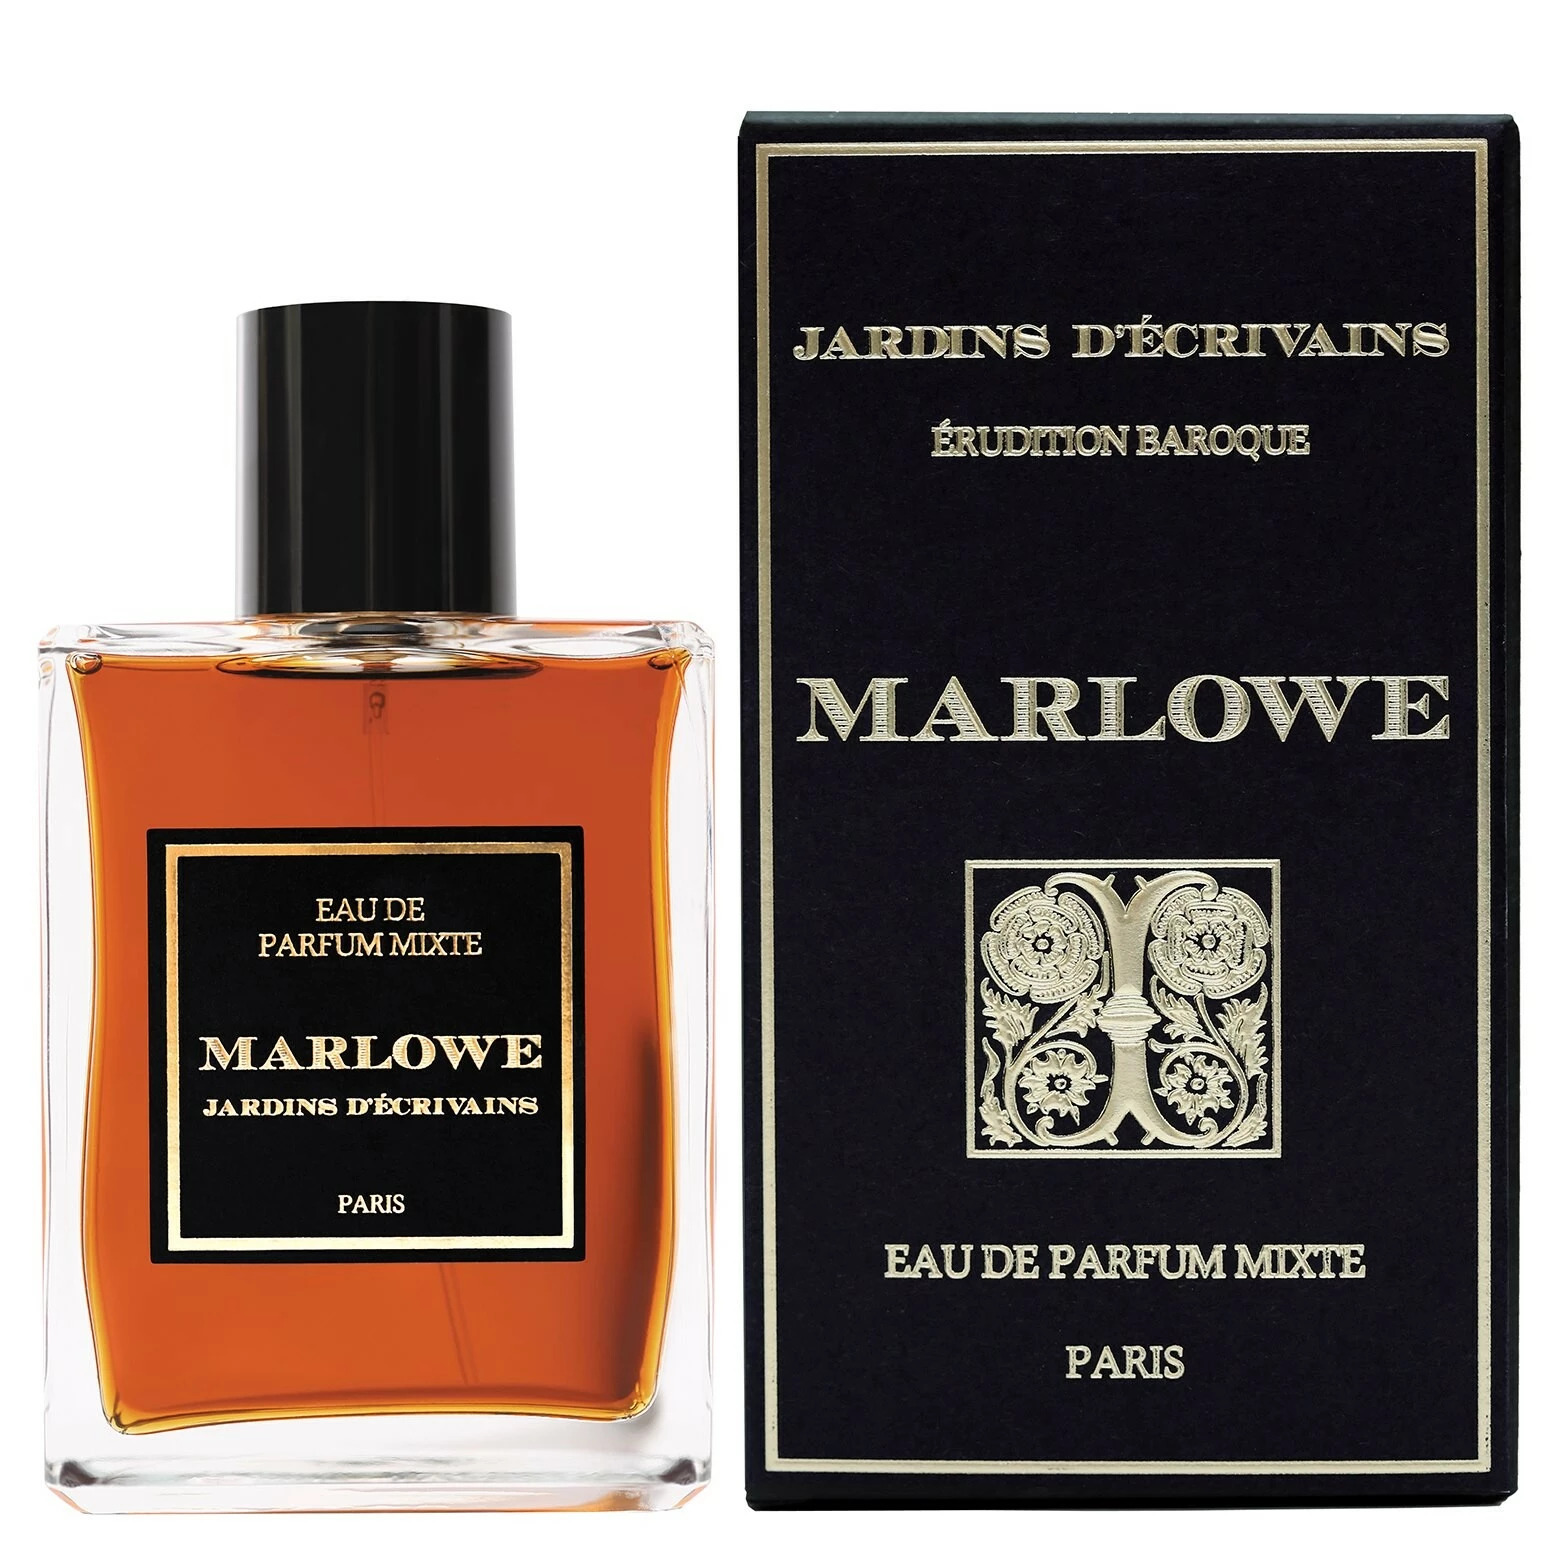 Marlowe от Jardins d Ecrivains — история жизни и творчества, переданная на яз��ке ароматов